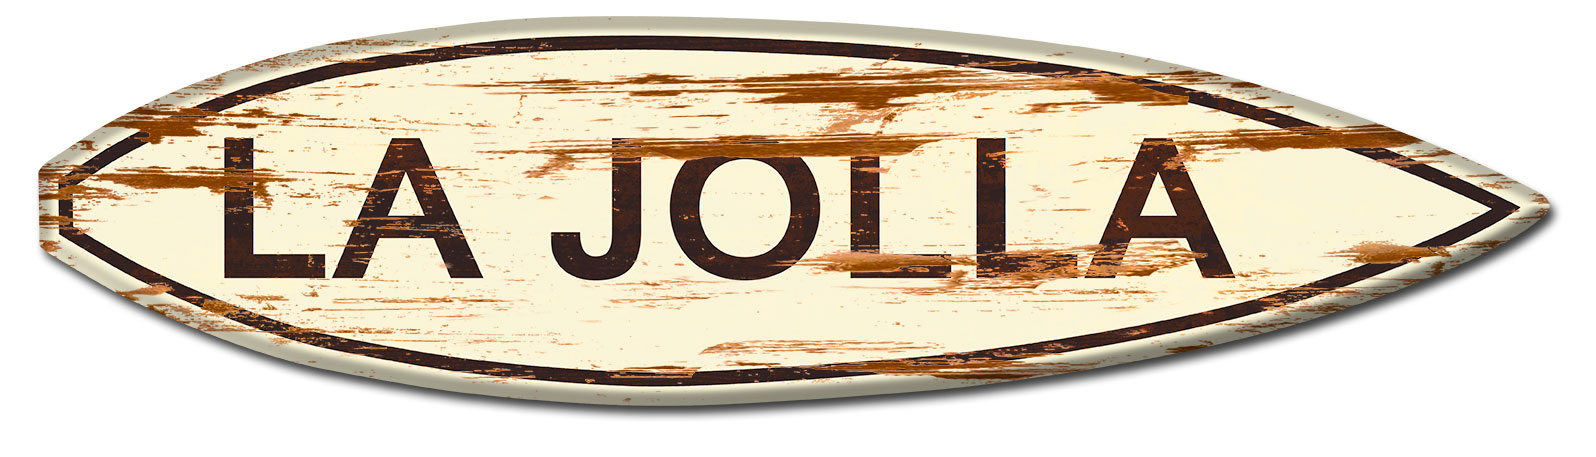 La Jolla Surf Board Wood Print Vintage Sign